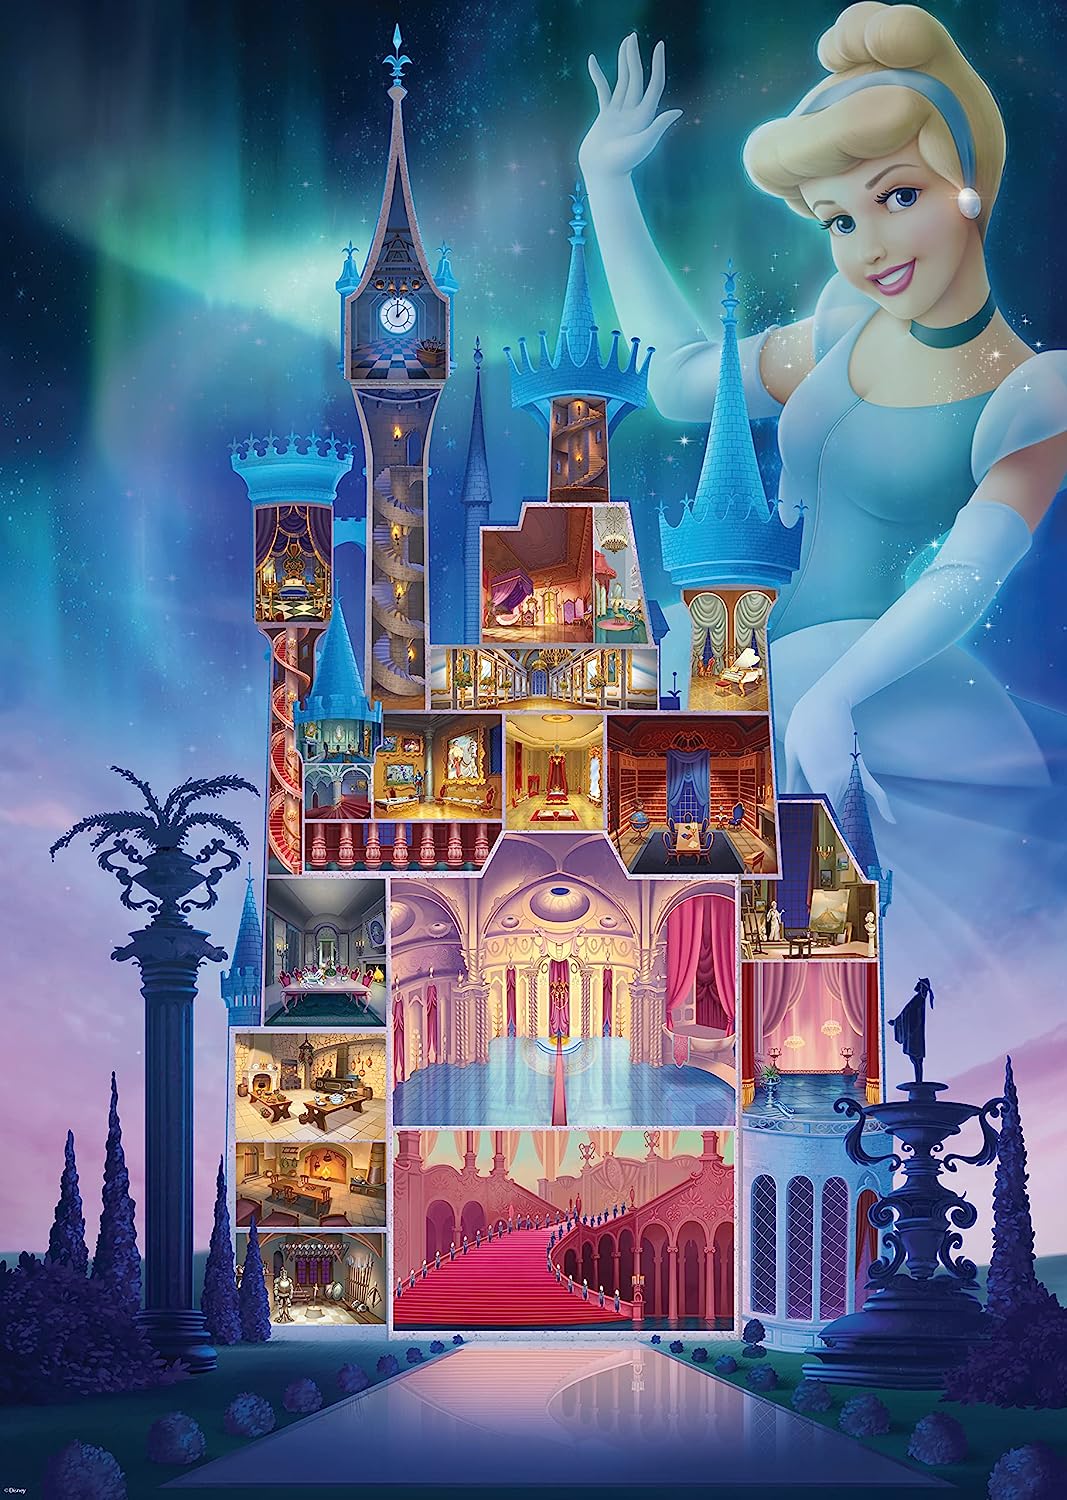 Ravensburger 17331 Disney Castles Cinderella 1000 Piece Jigsaw Puzzles for Adult and Children